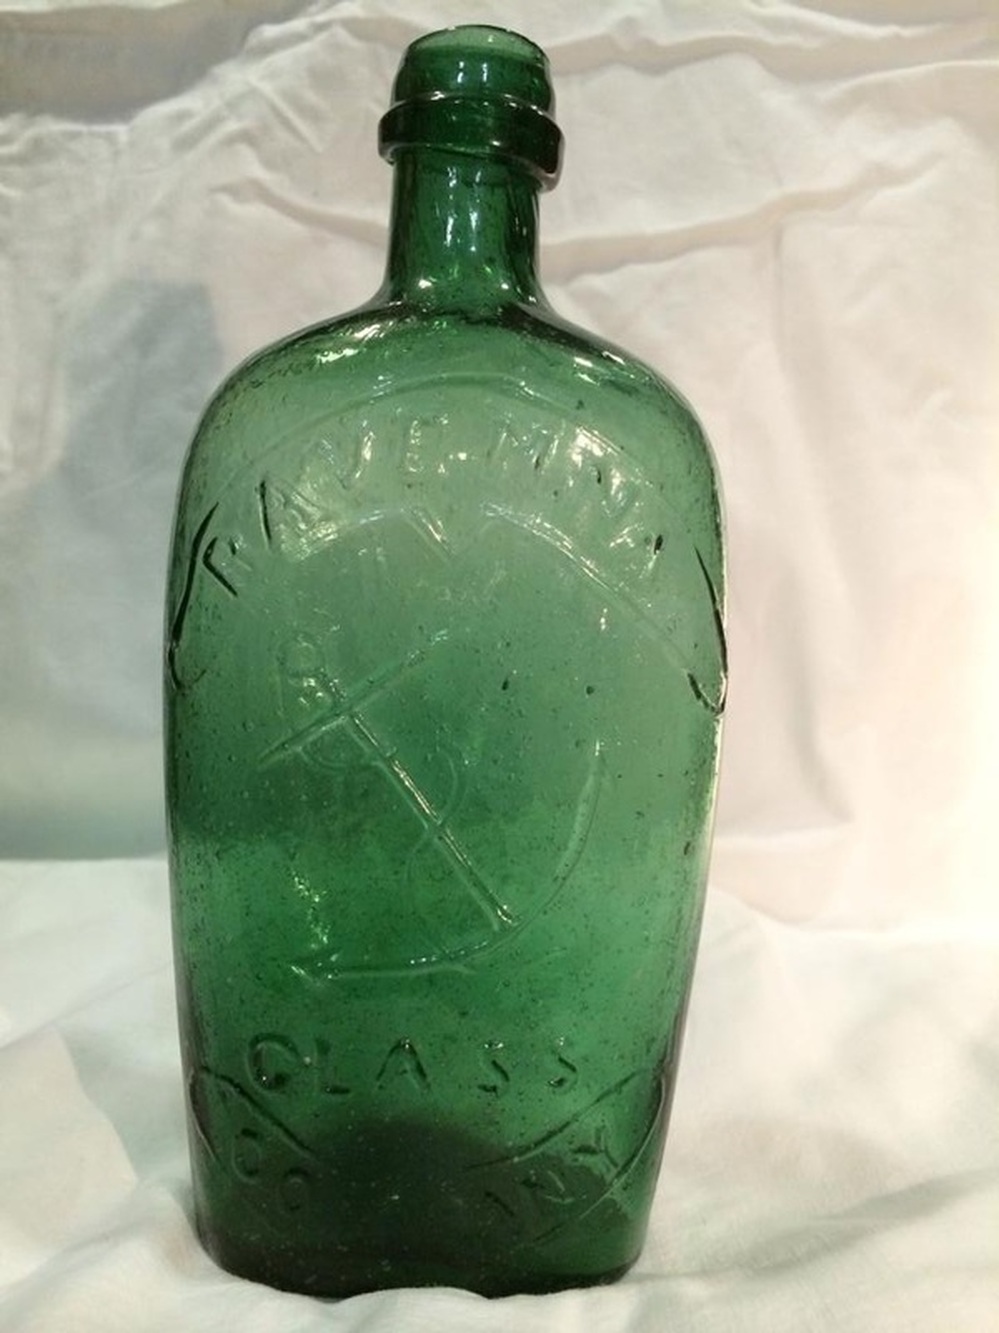 Facebook Louis Fifer Historical American Flasks - Historical American Glass